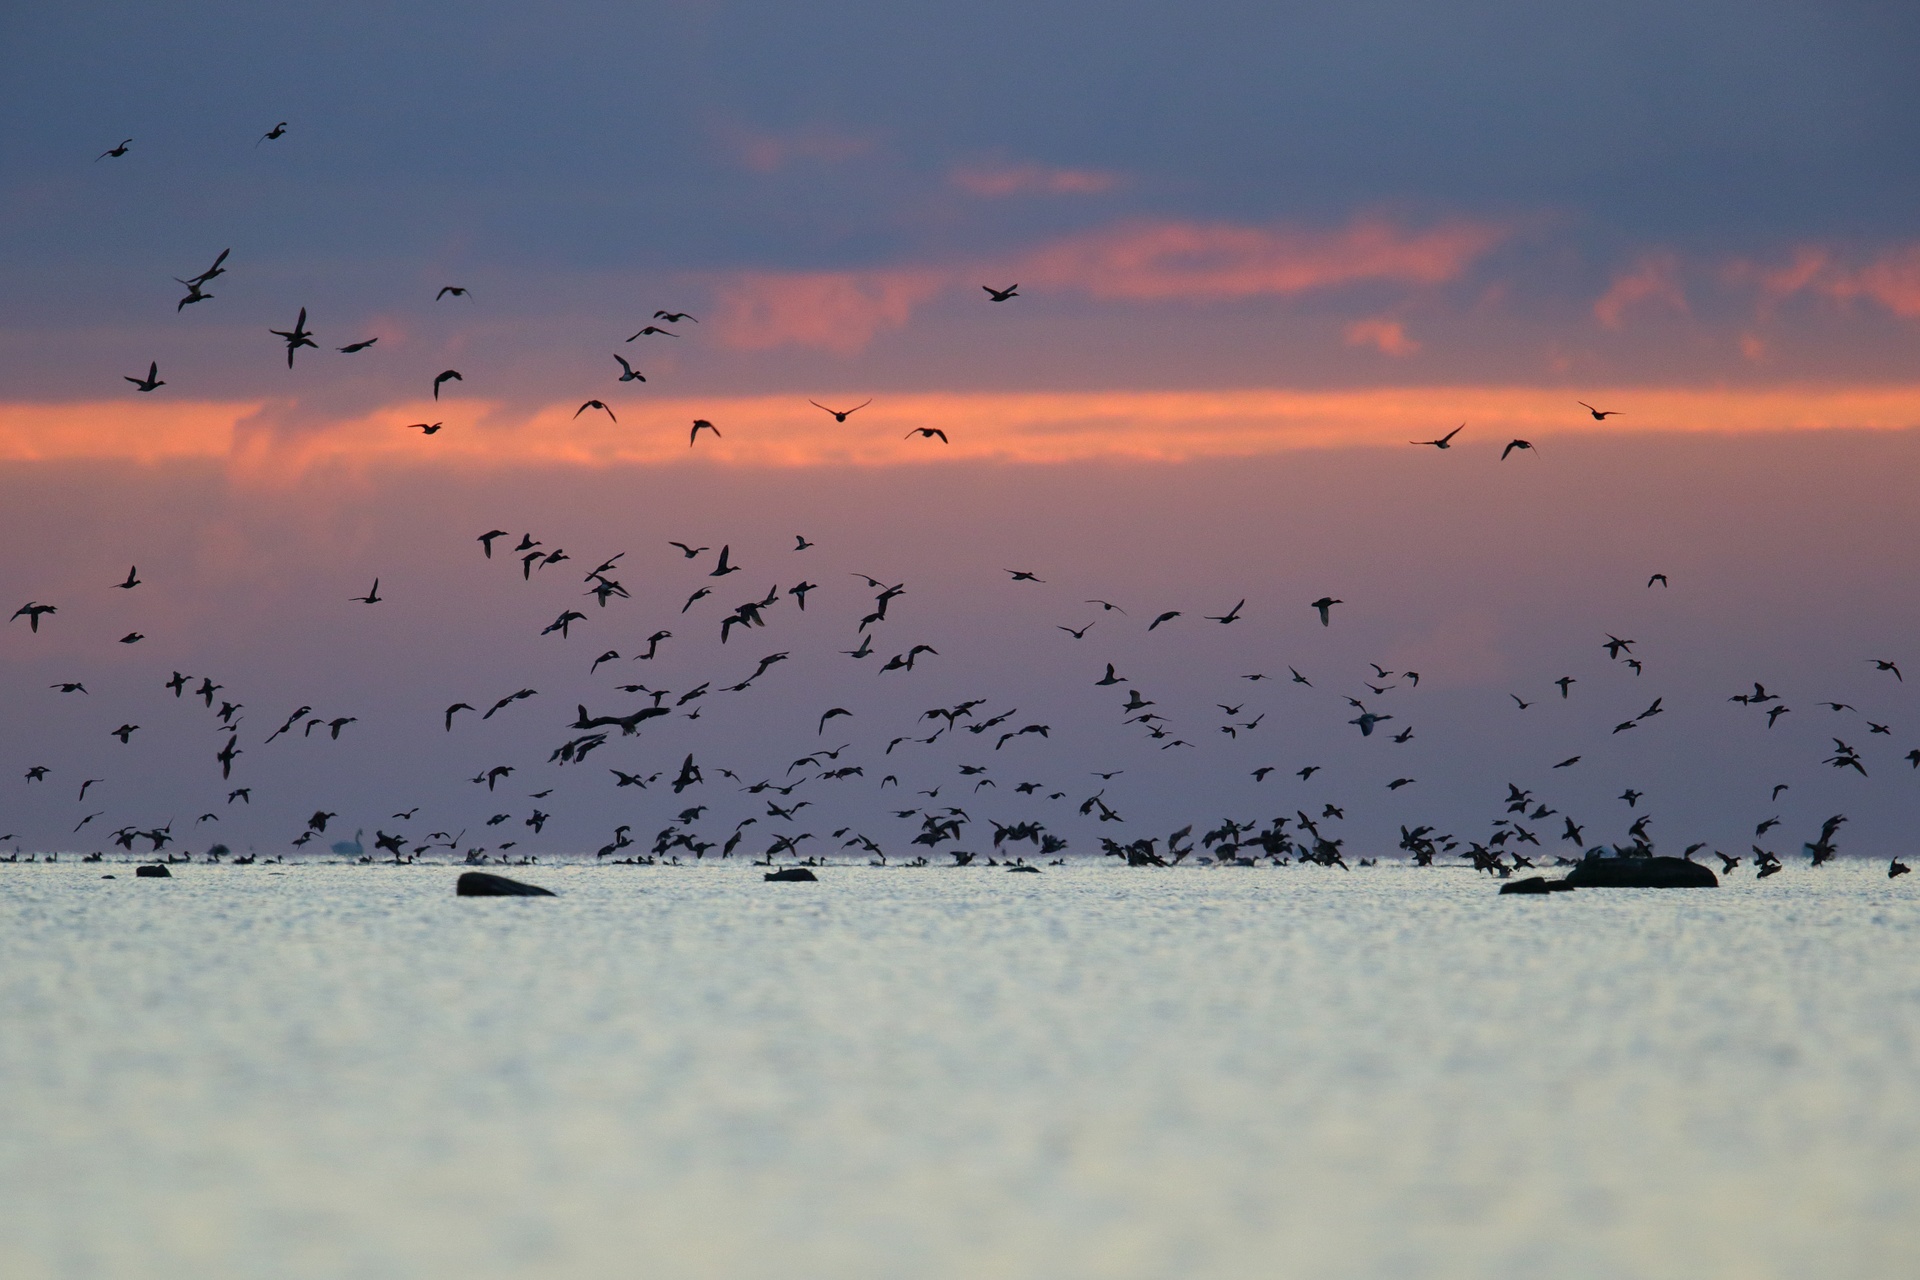 birds flocking at sunset over Estonia's Baltic coastline